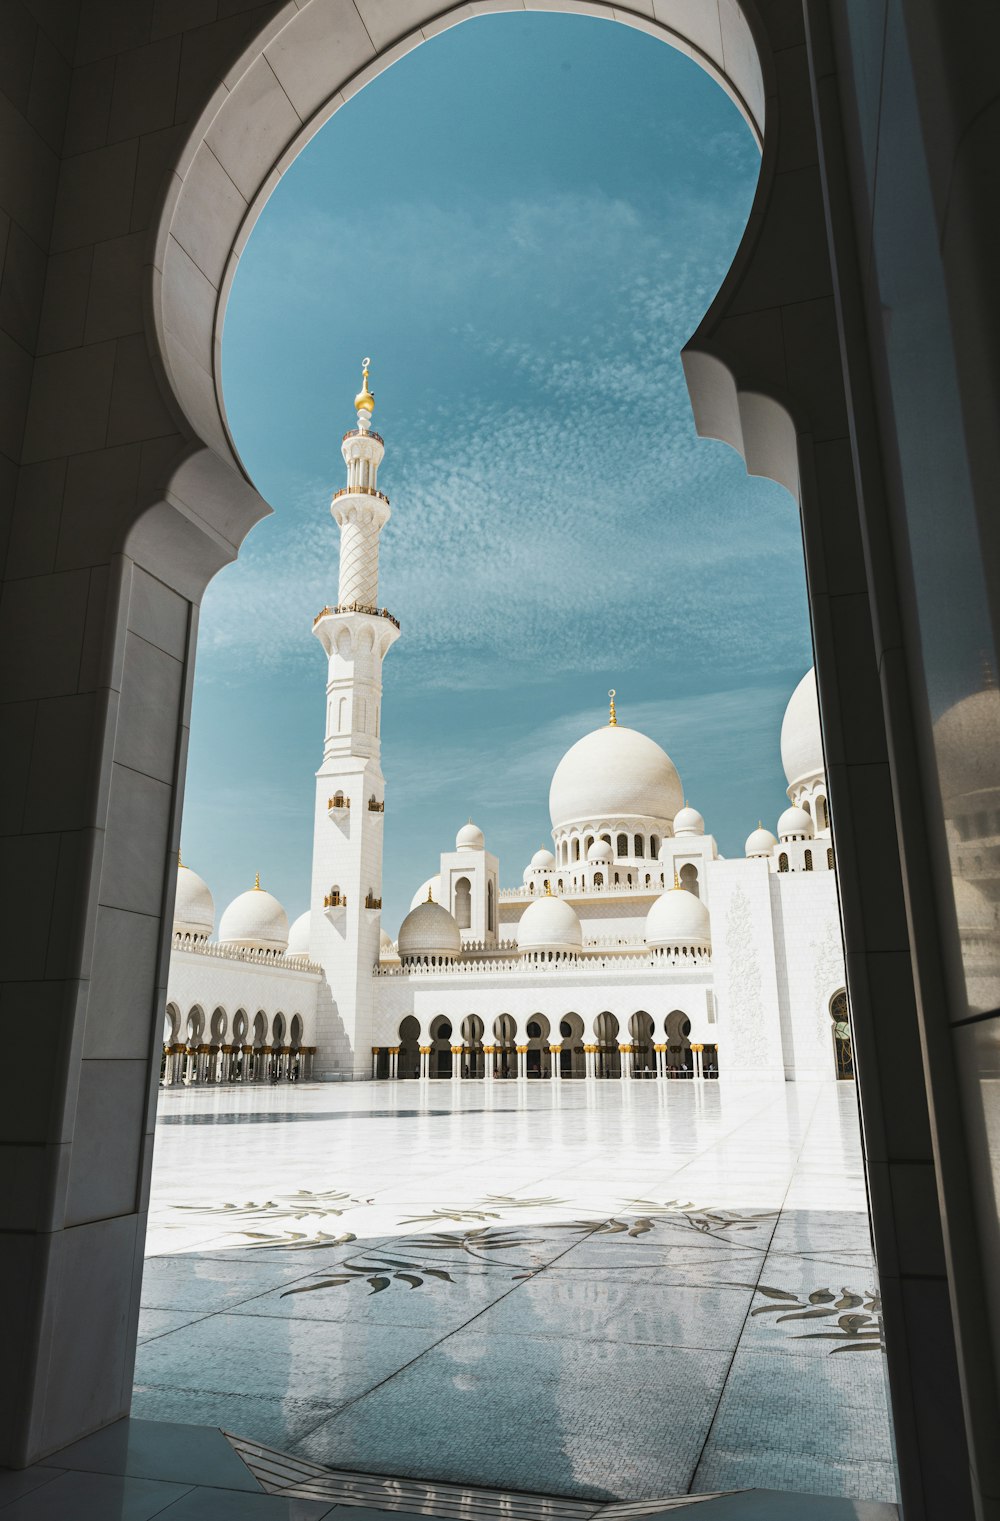 Dubai Mosque Pictures | Download Free Images on Unsplash